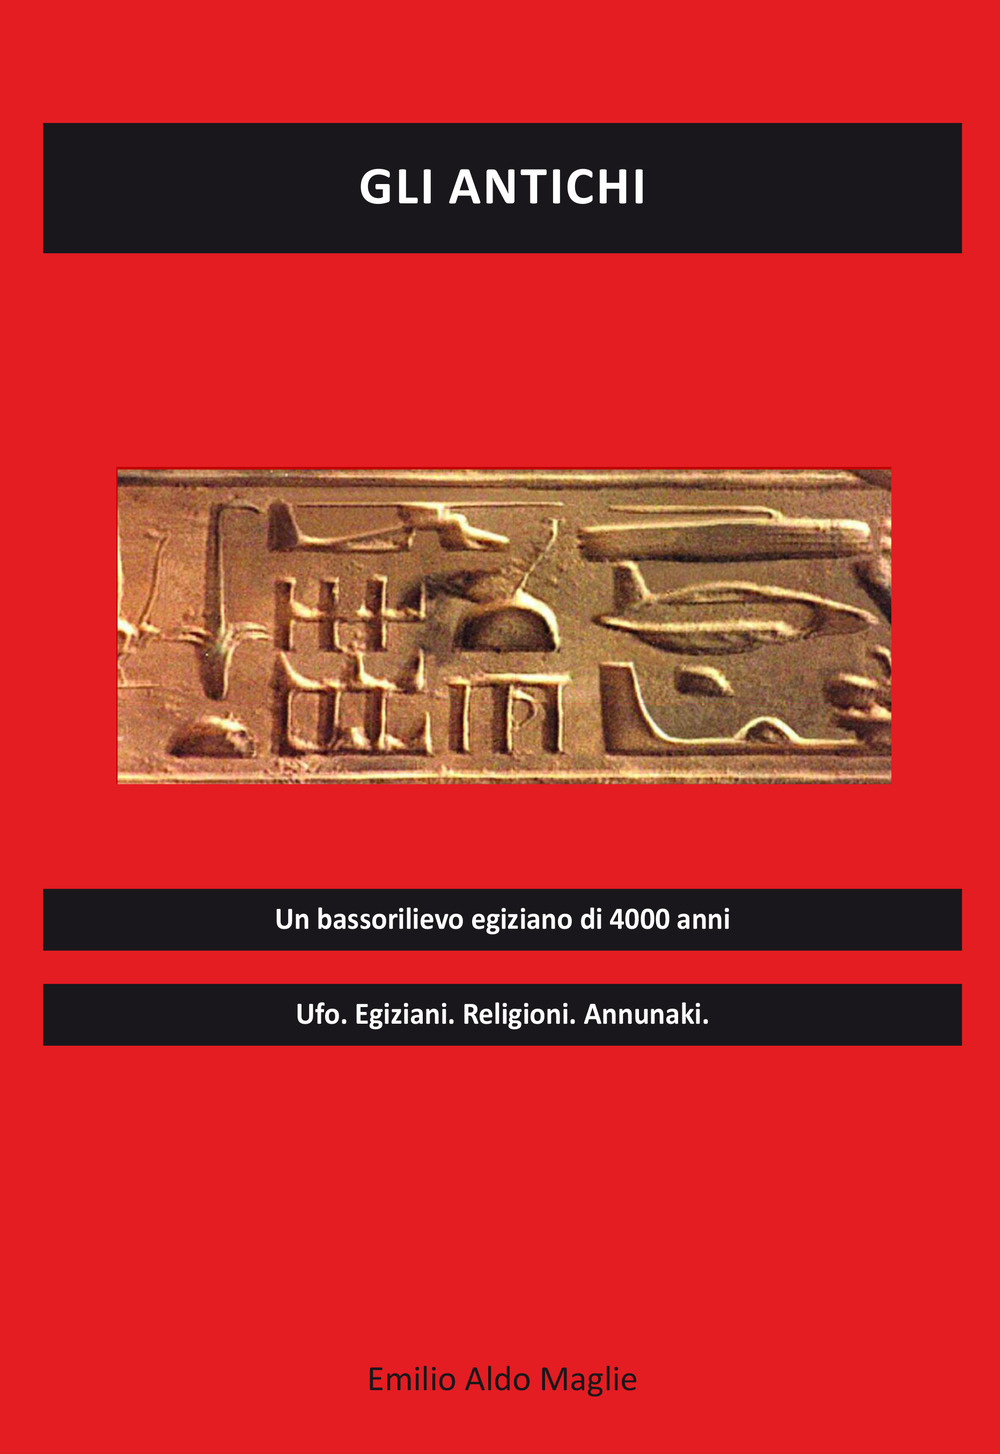 Gli antichi. Ufo, egiziani, religioni, annunaki